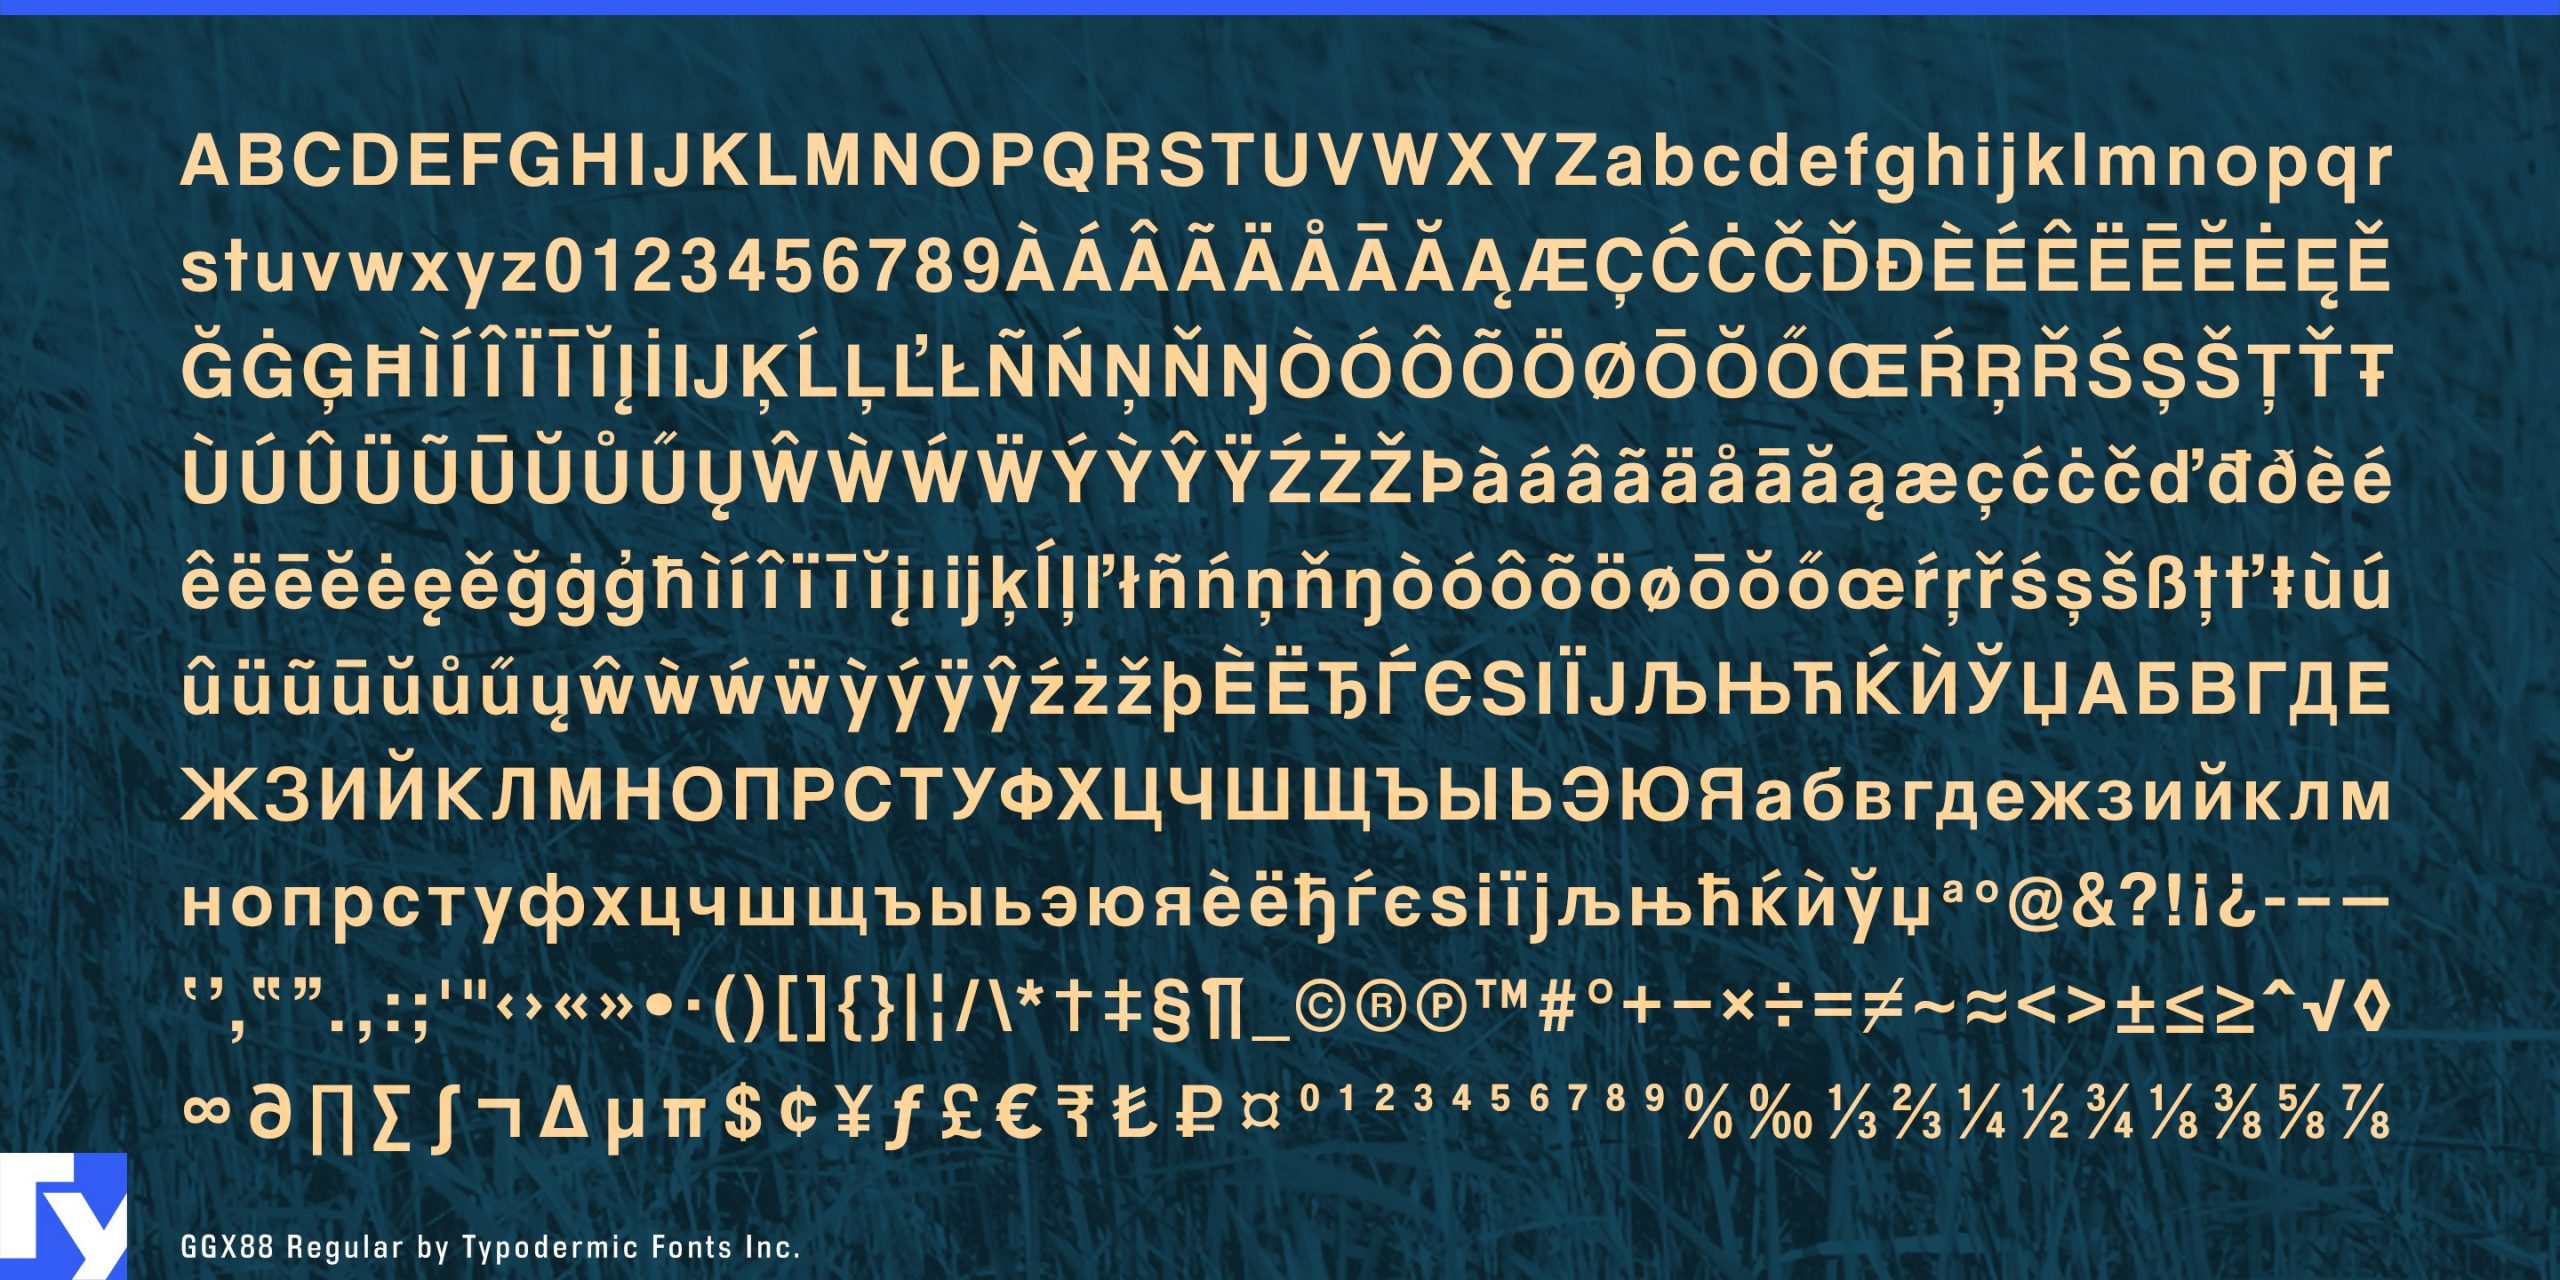 Dynamic Display: GGX88 Typeface Makes Headings Po